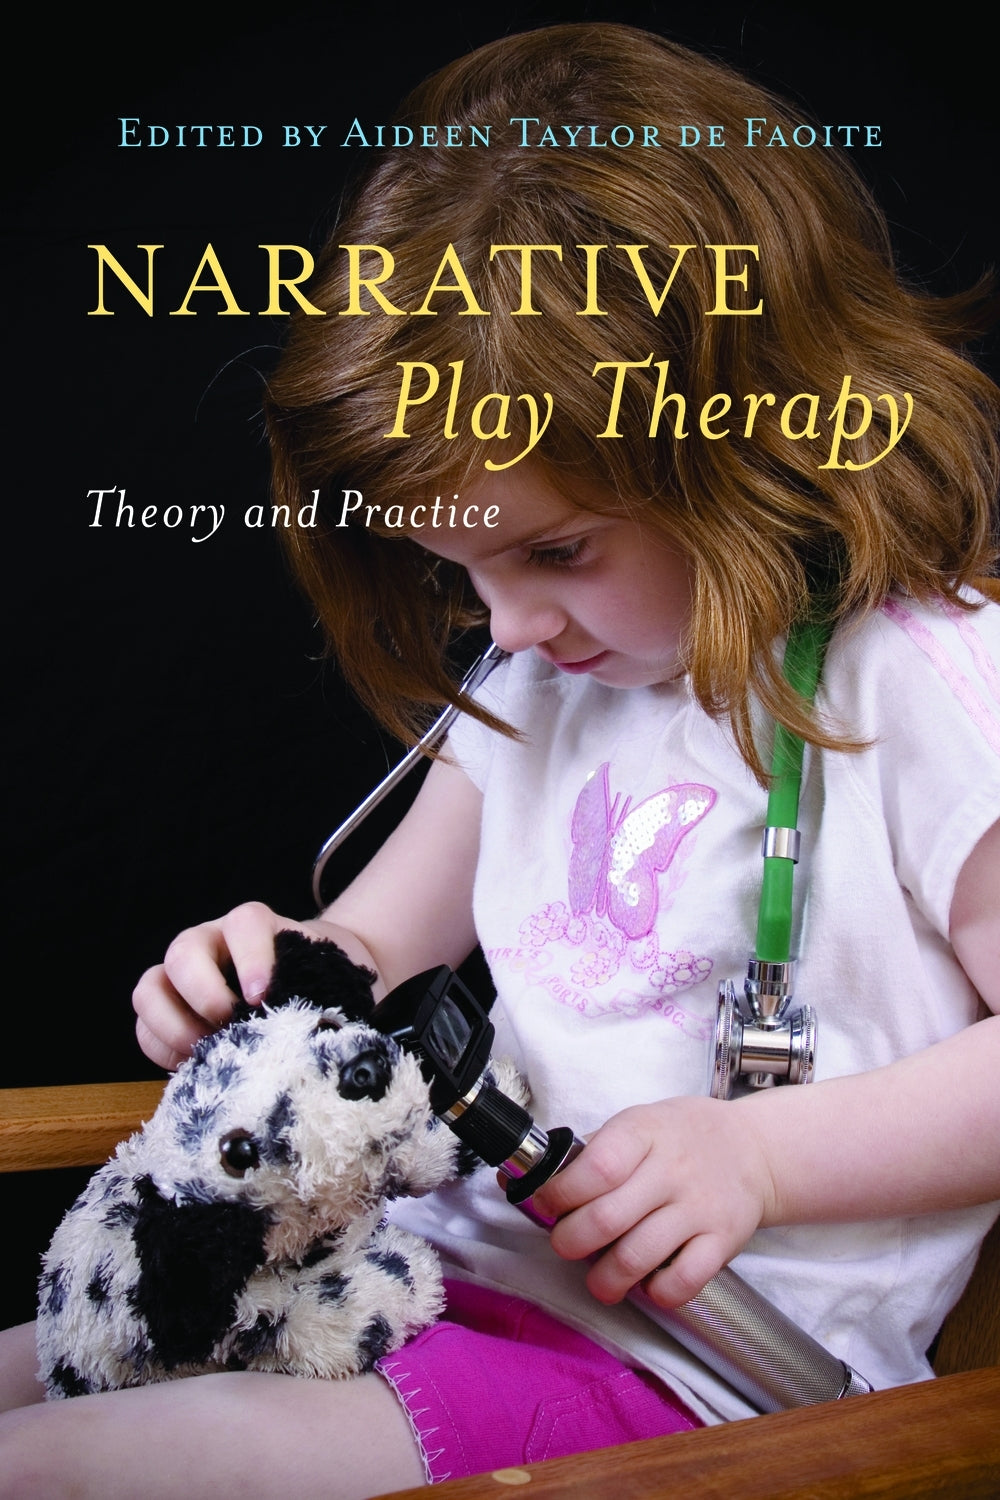 Narrative Play Therapy by Aideen Taylor de Taylor de Faoite